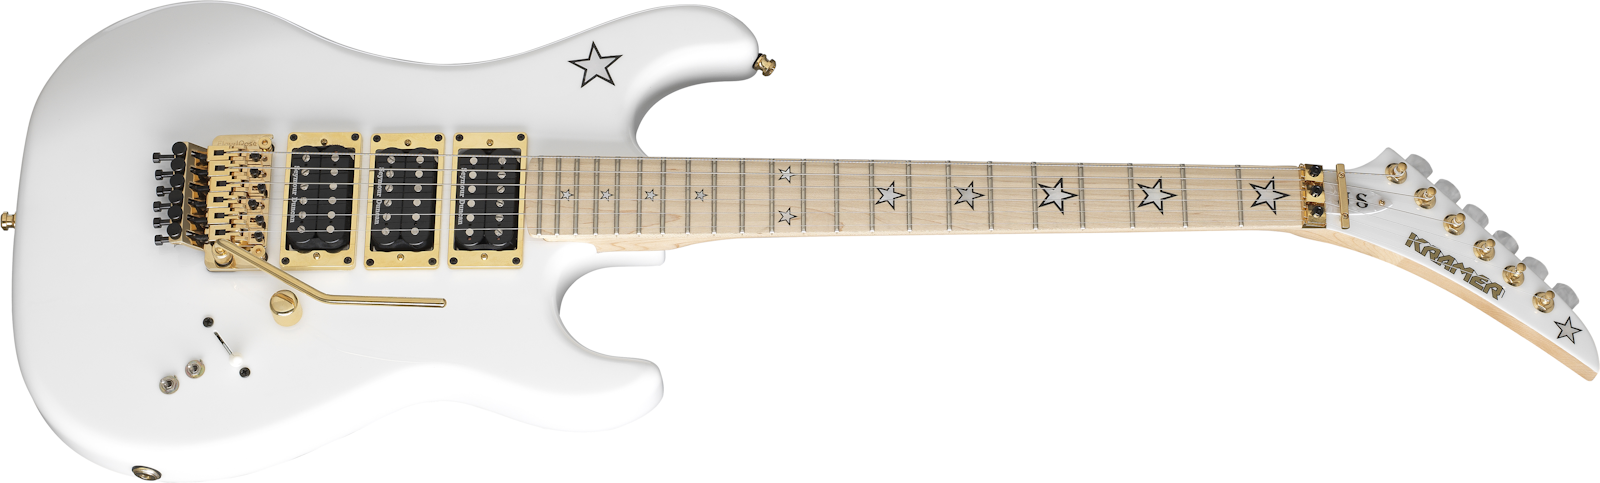 Kramer Guitars Jersey Star elektrisk gitar